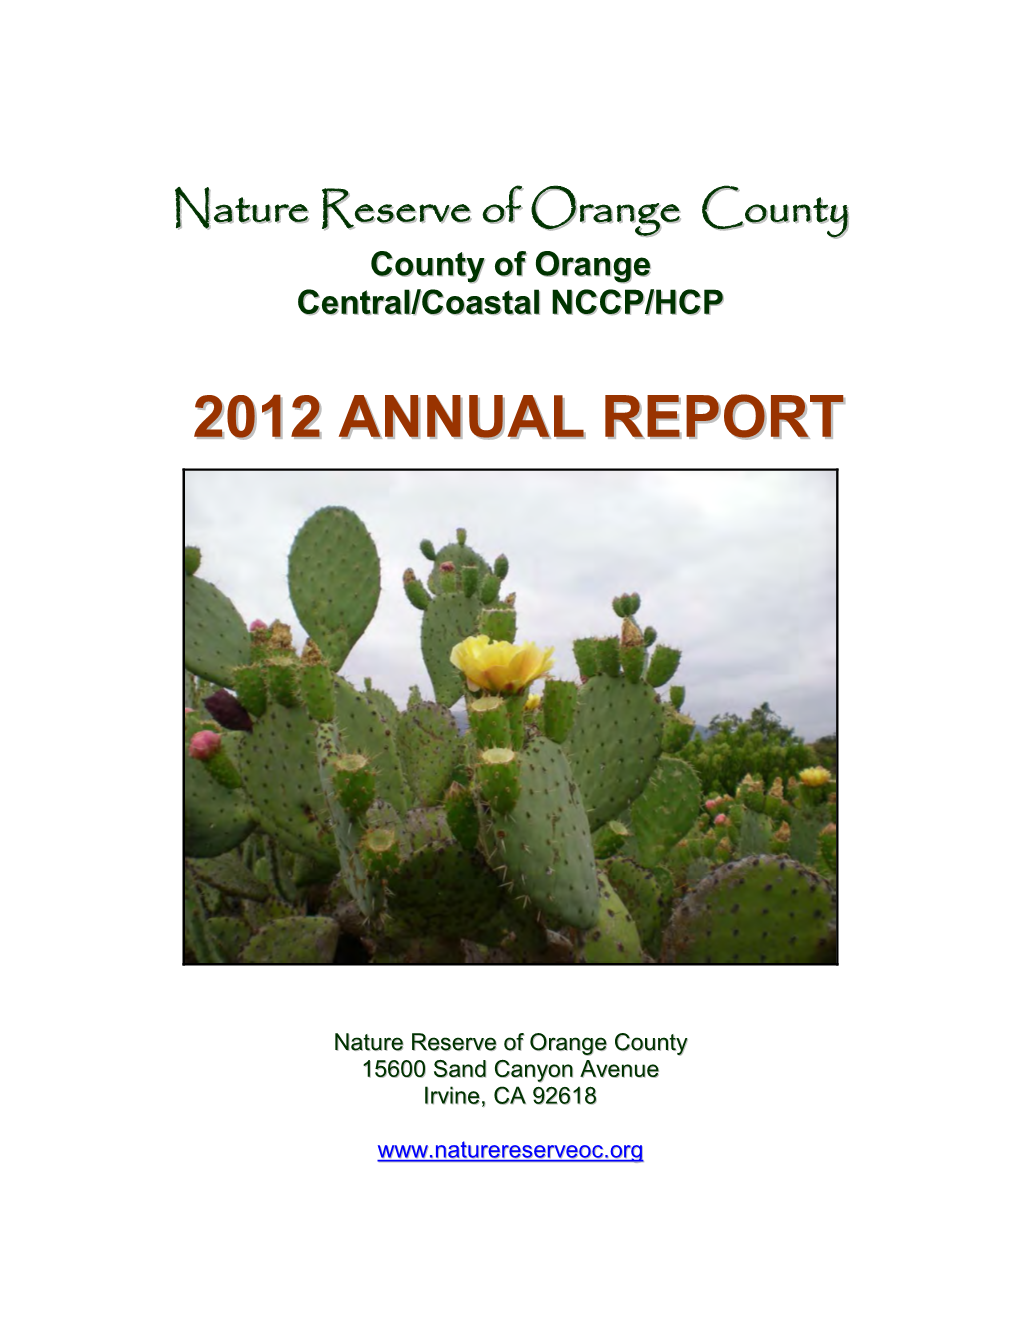 NROC 2012 Annual Report